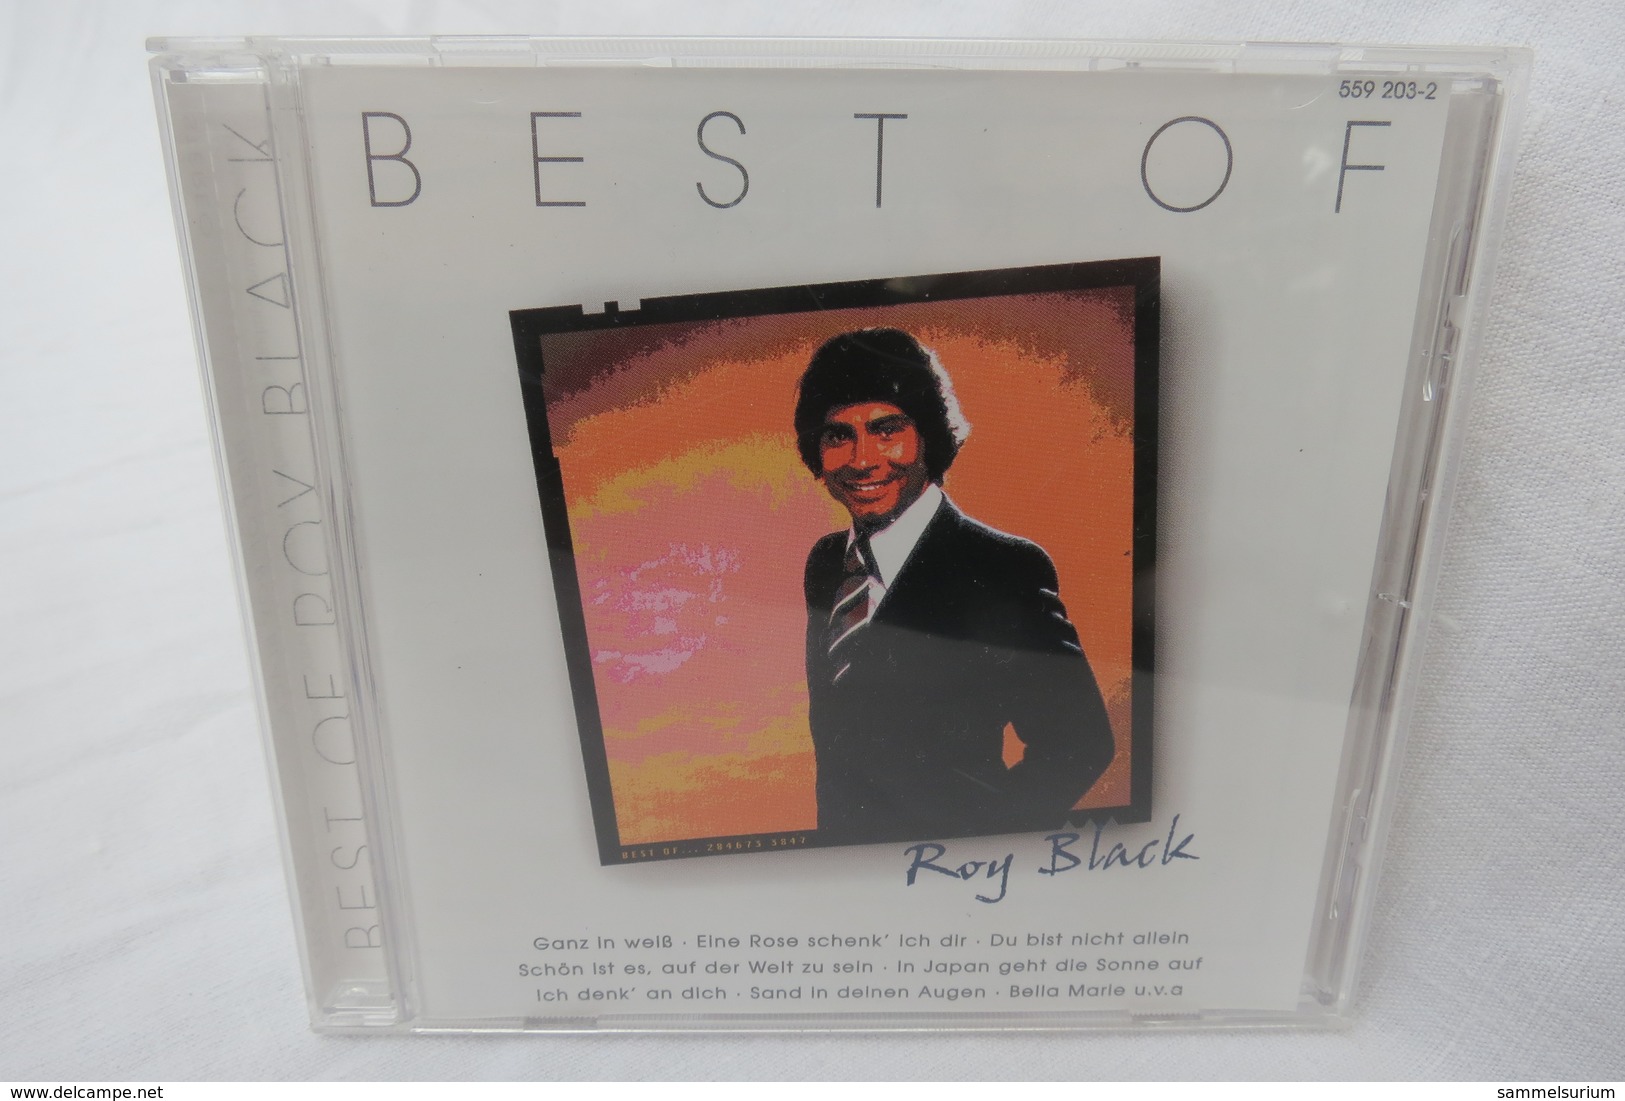 CD "Roy Black" Best Of - Sonstige - Deutsche Musik